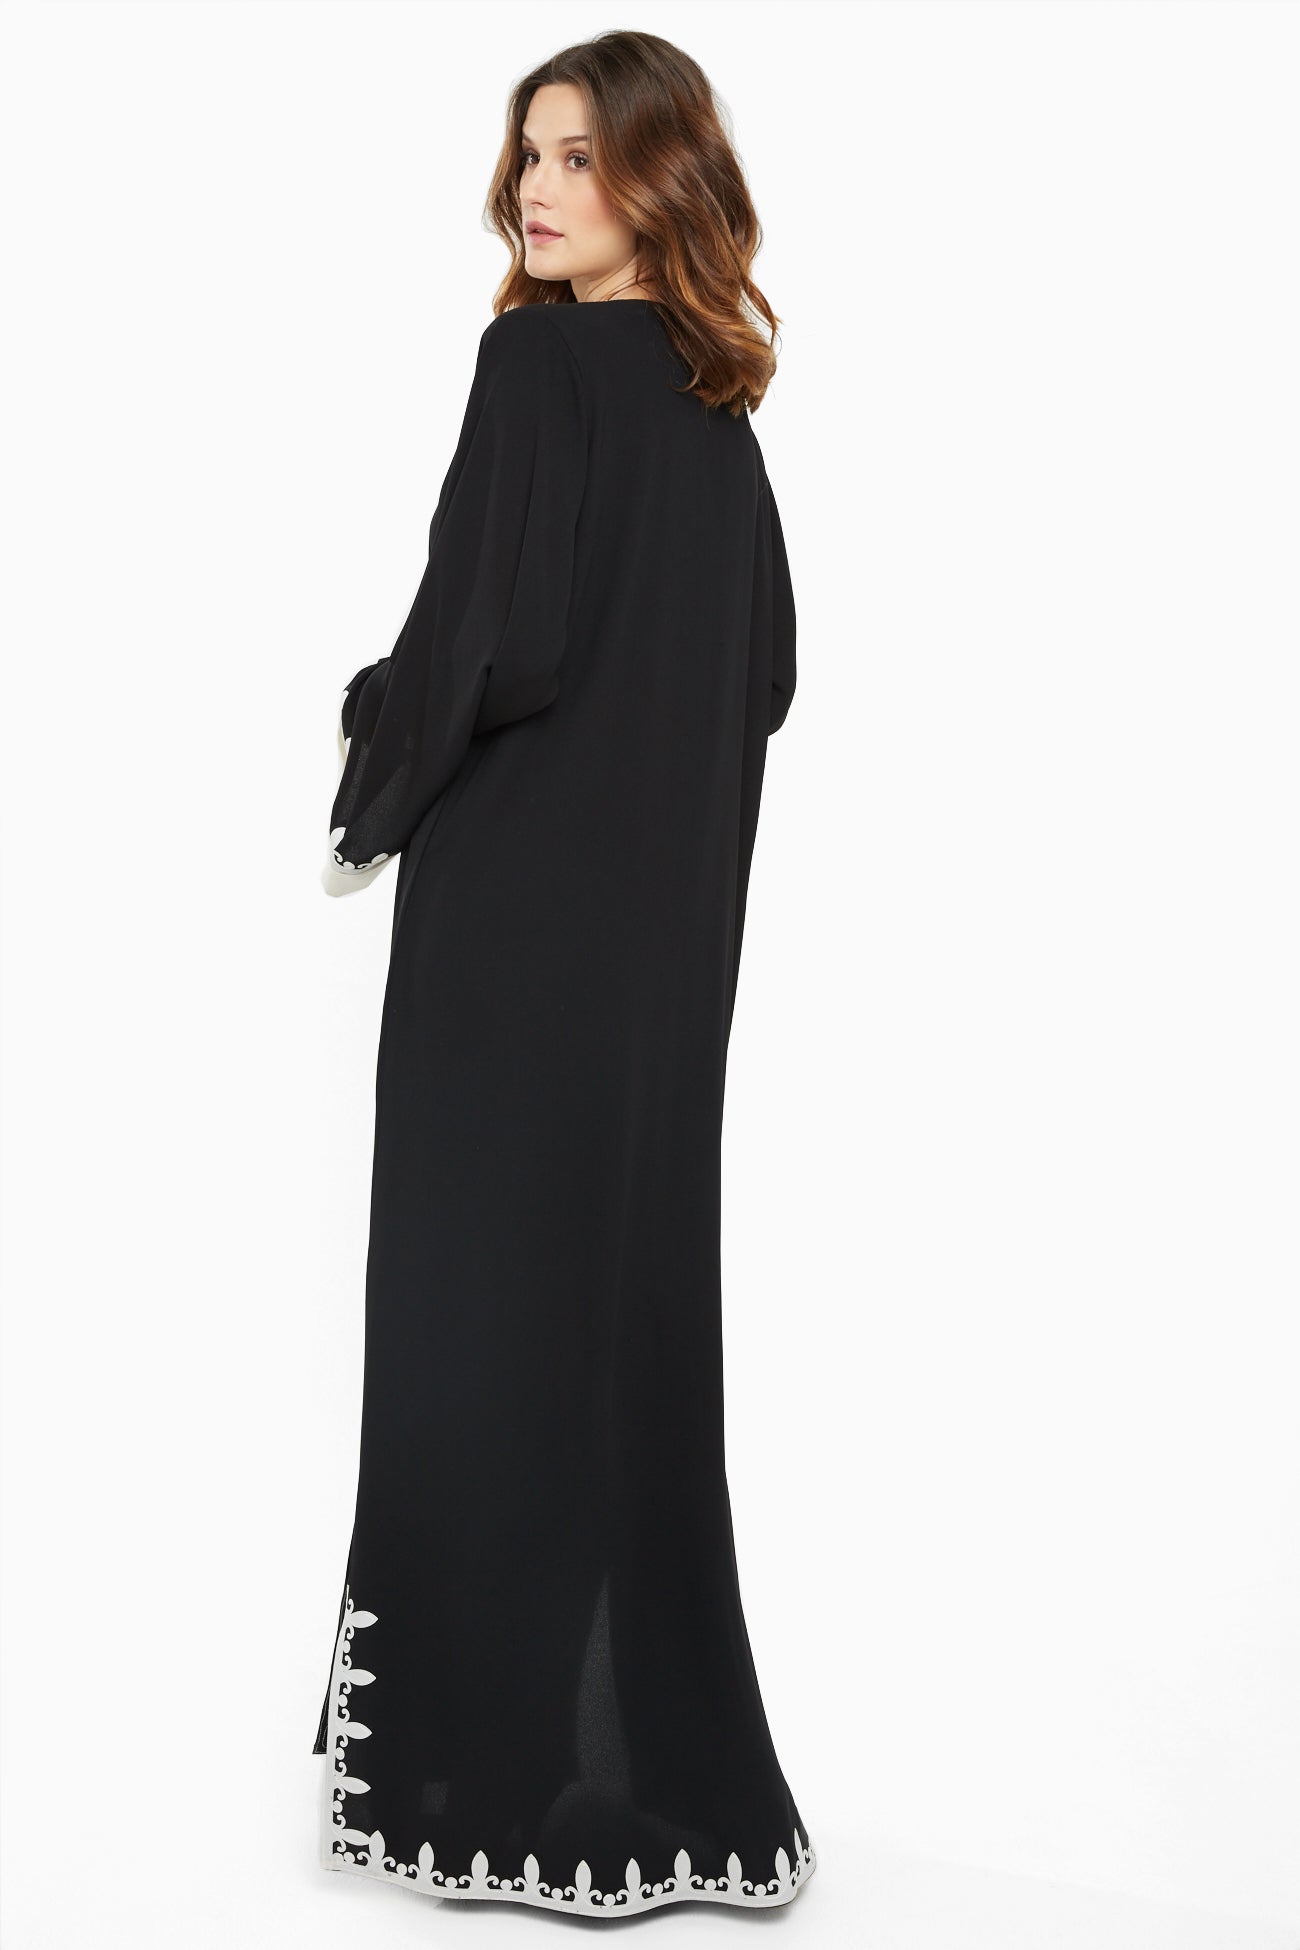 Dubai-made Nukhbaa brand Abaya a reflection of Dubai's luxury fashion scene-AJ733A